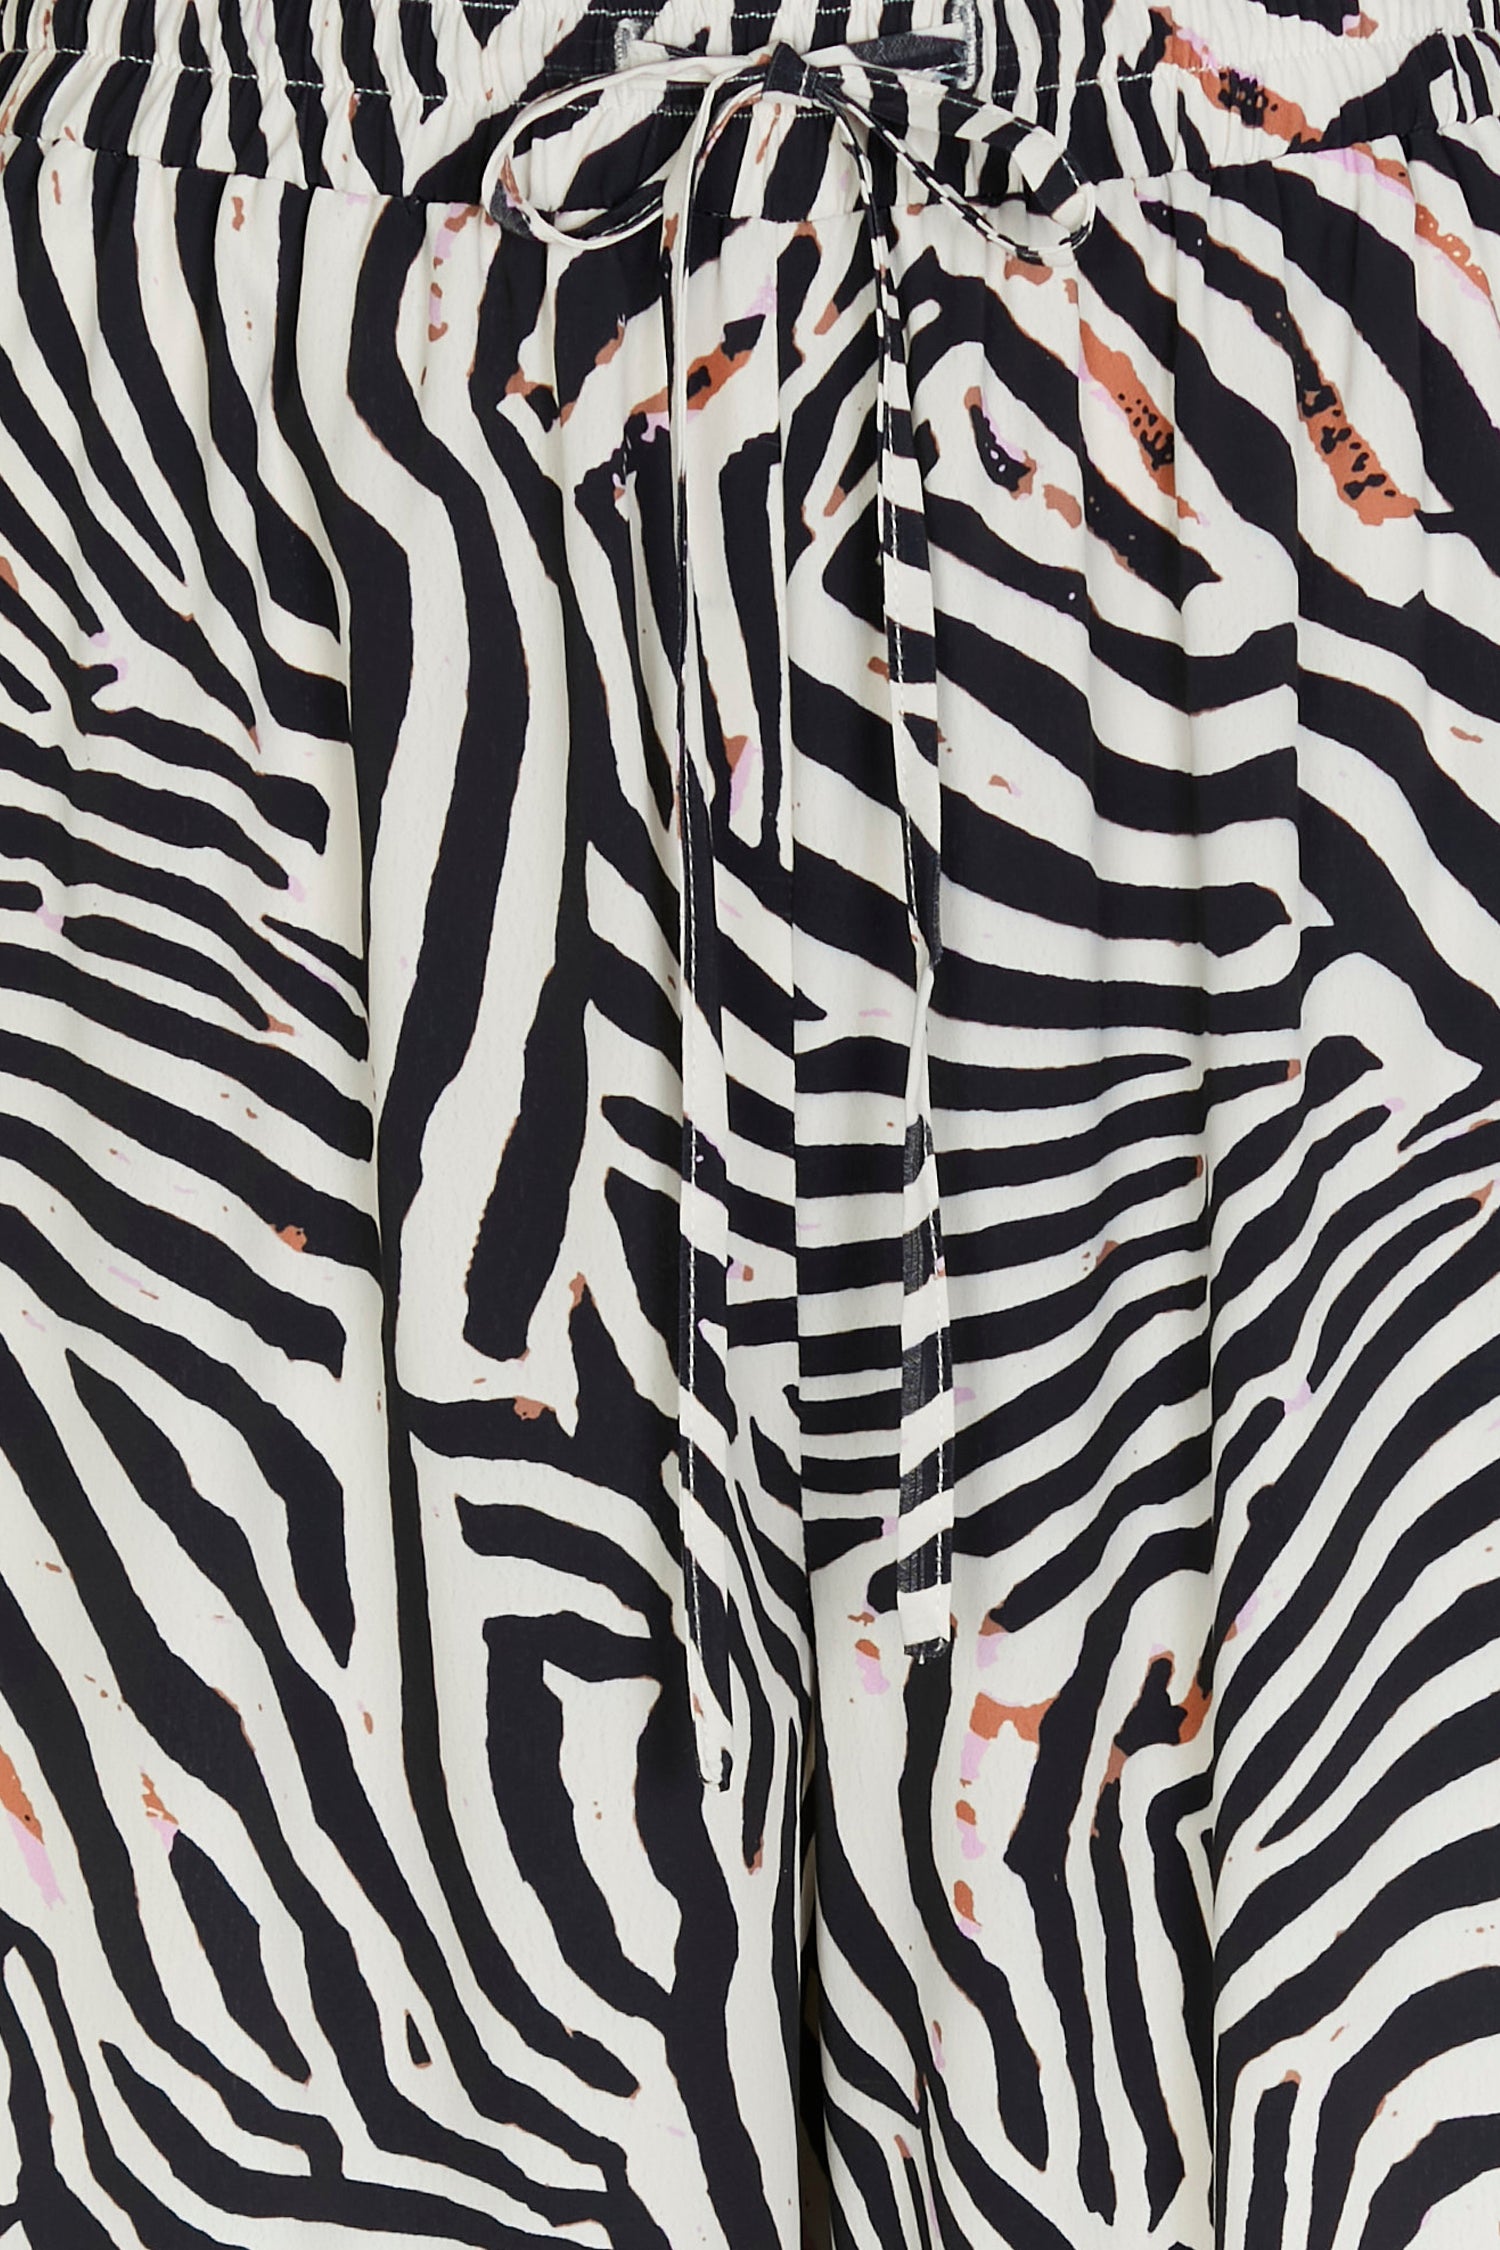 Zebra Trousers